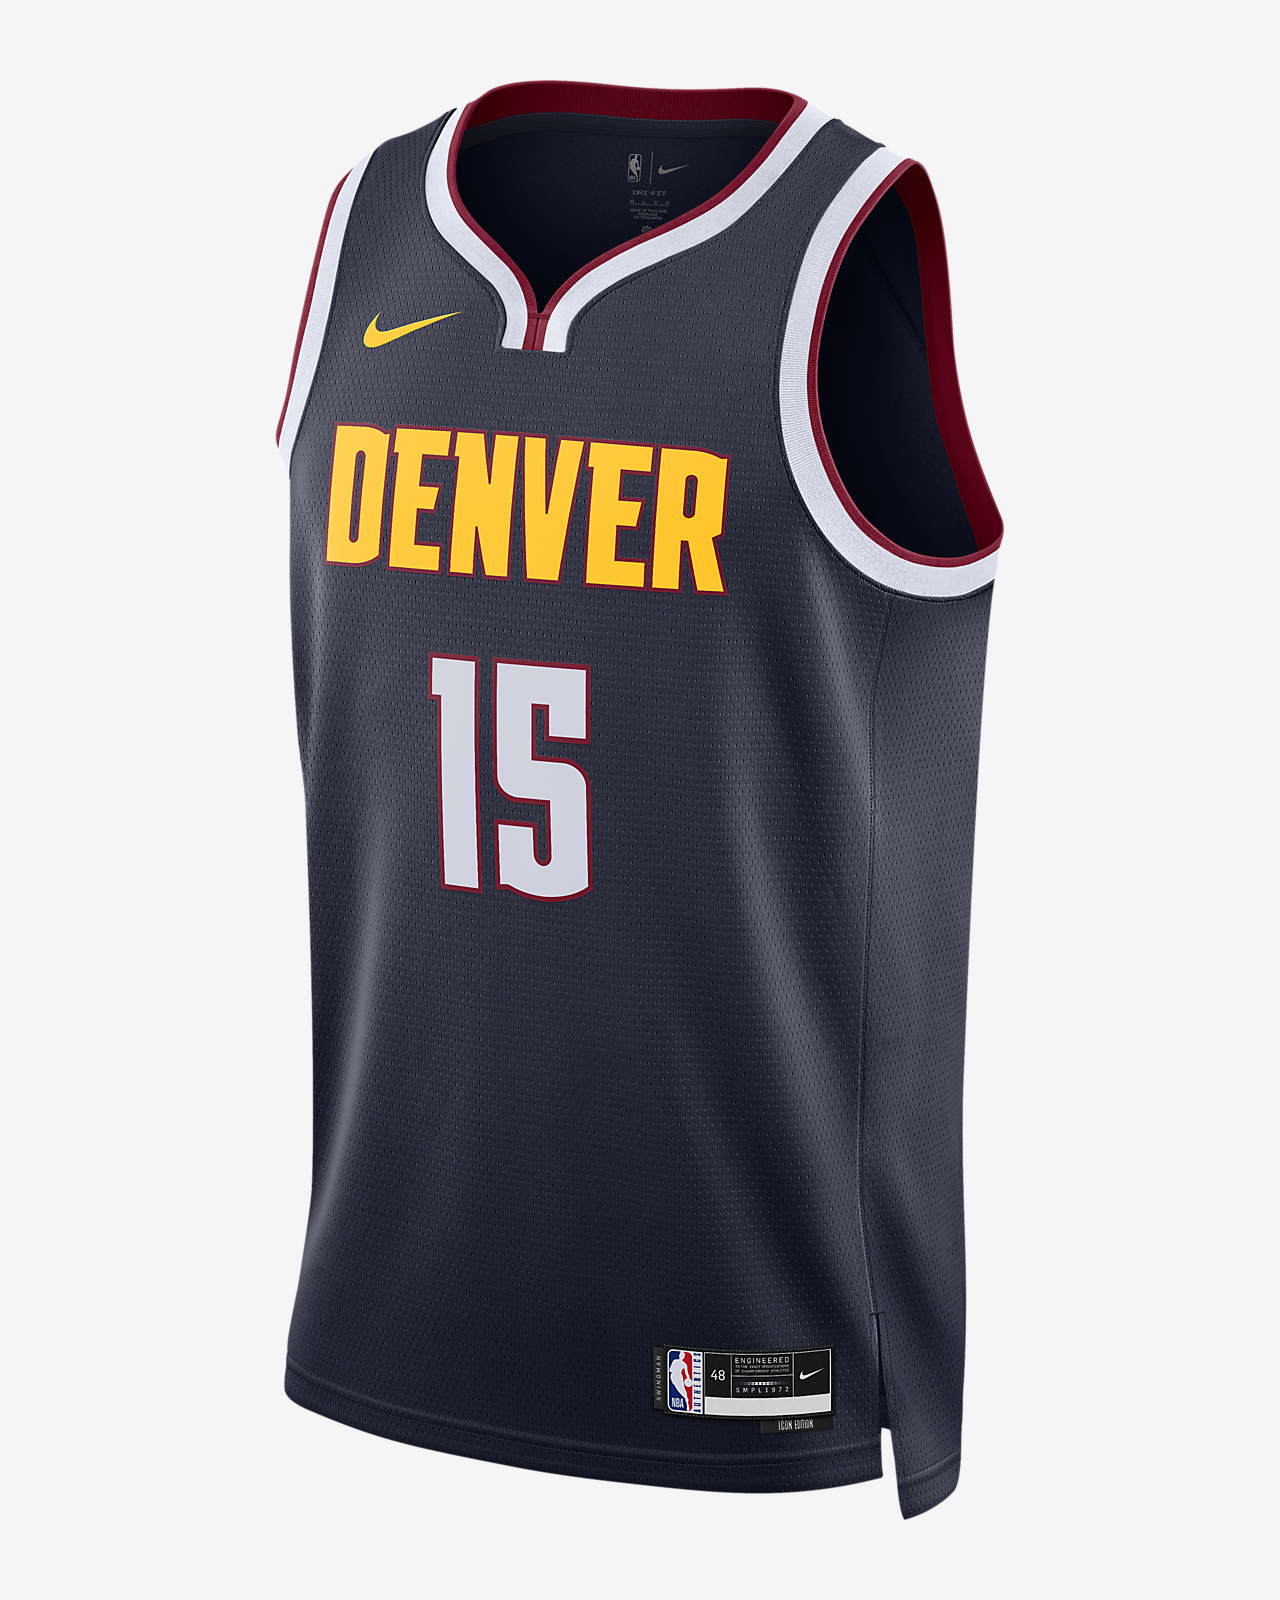 2022/23 赛季丹佛掘金队 Icon Edition Nike Dri-FIT NBA Swingman Jersey 男子球衣